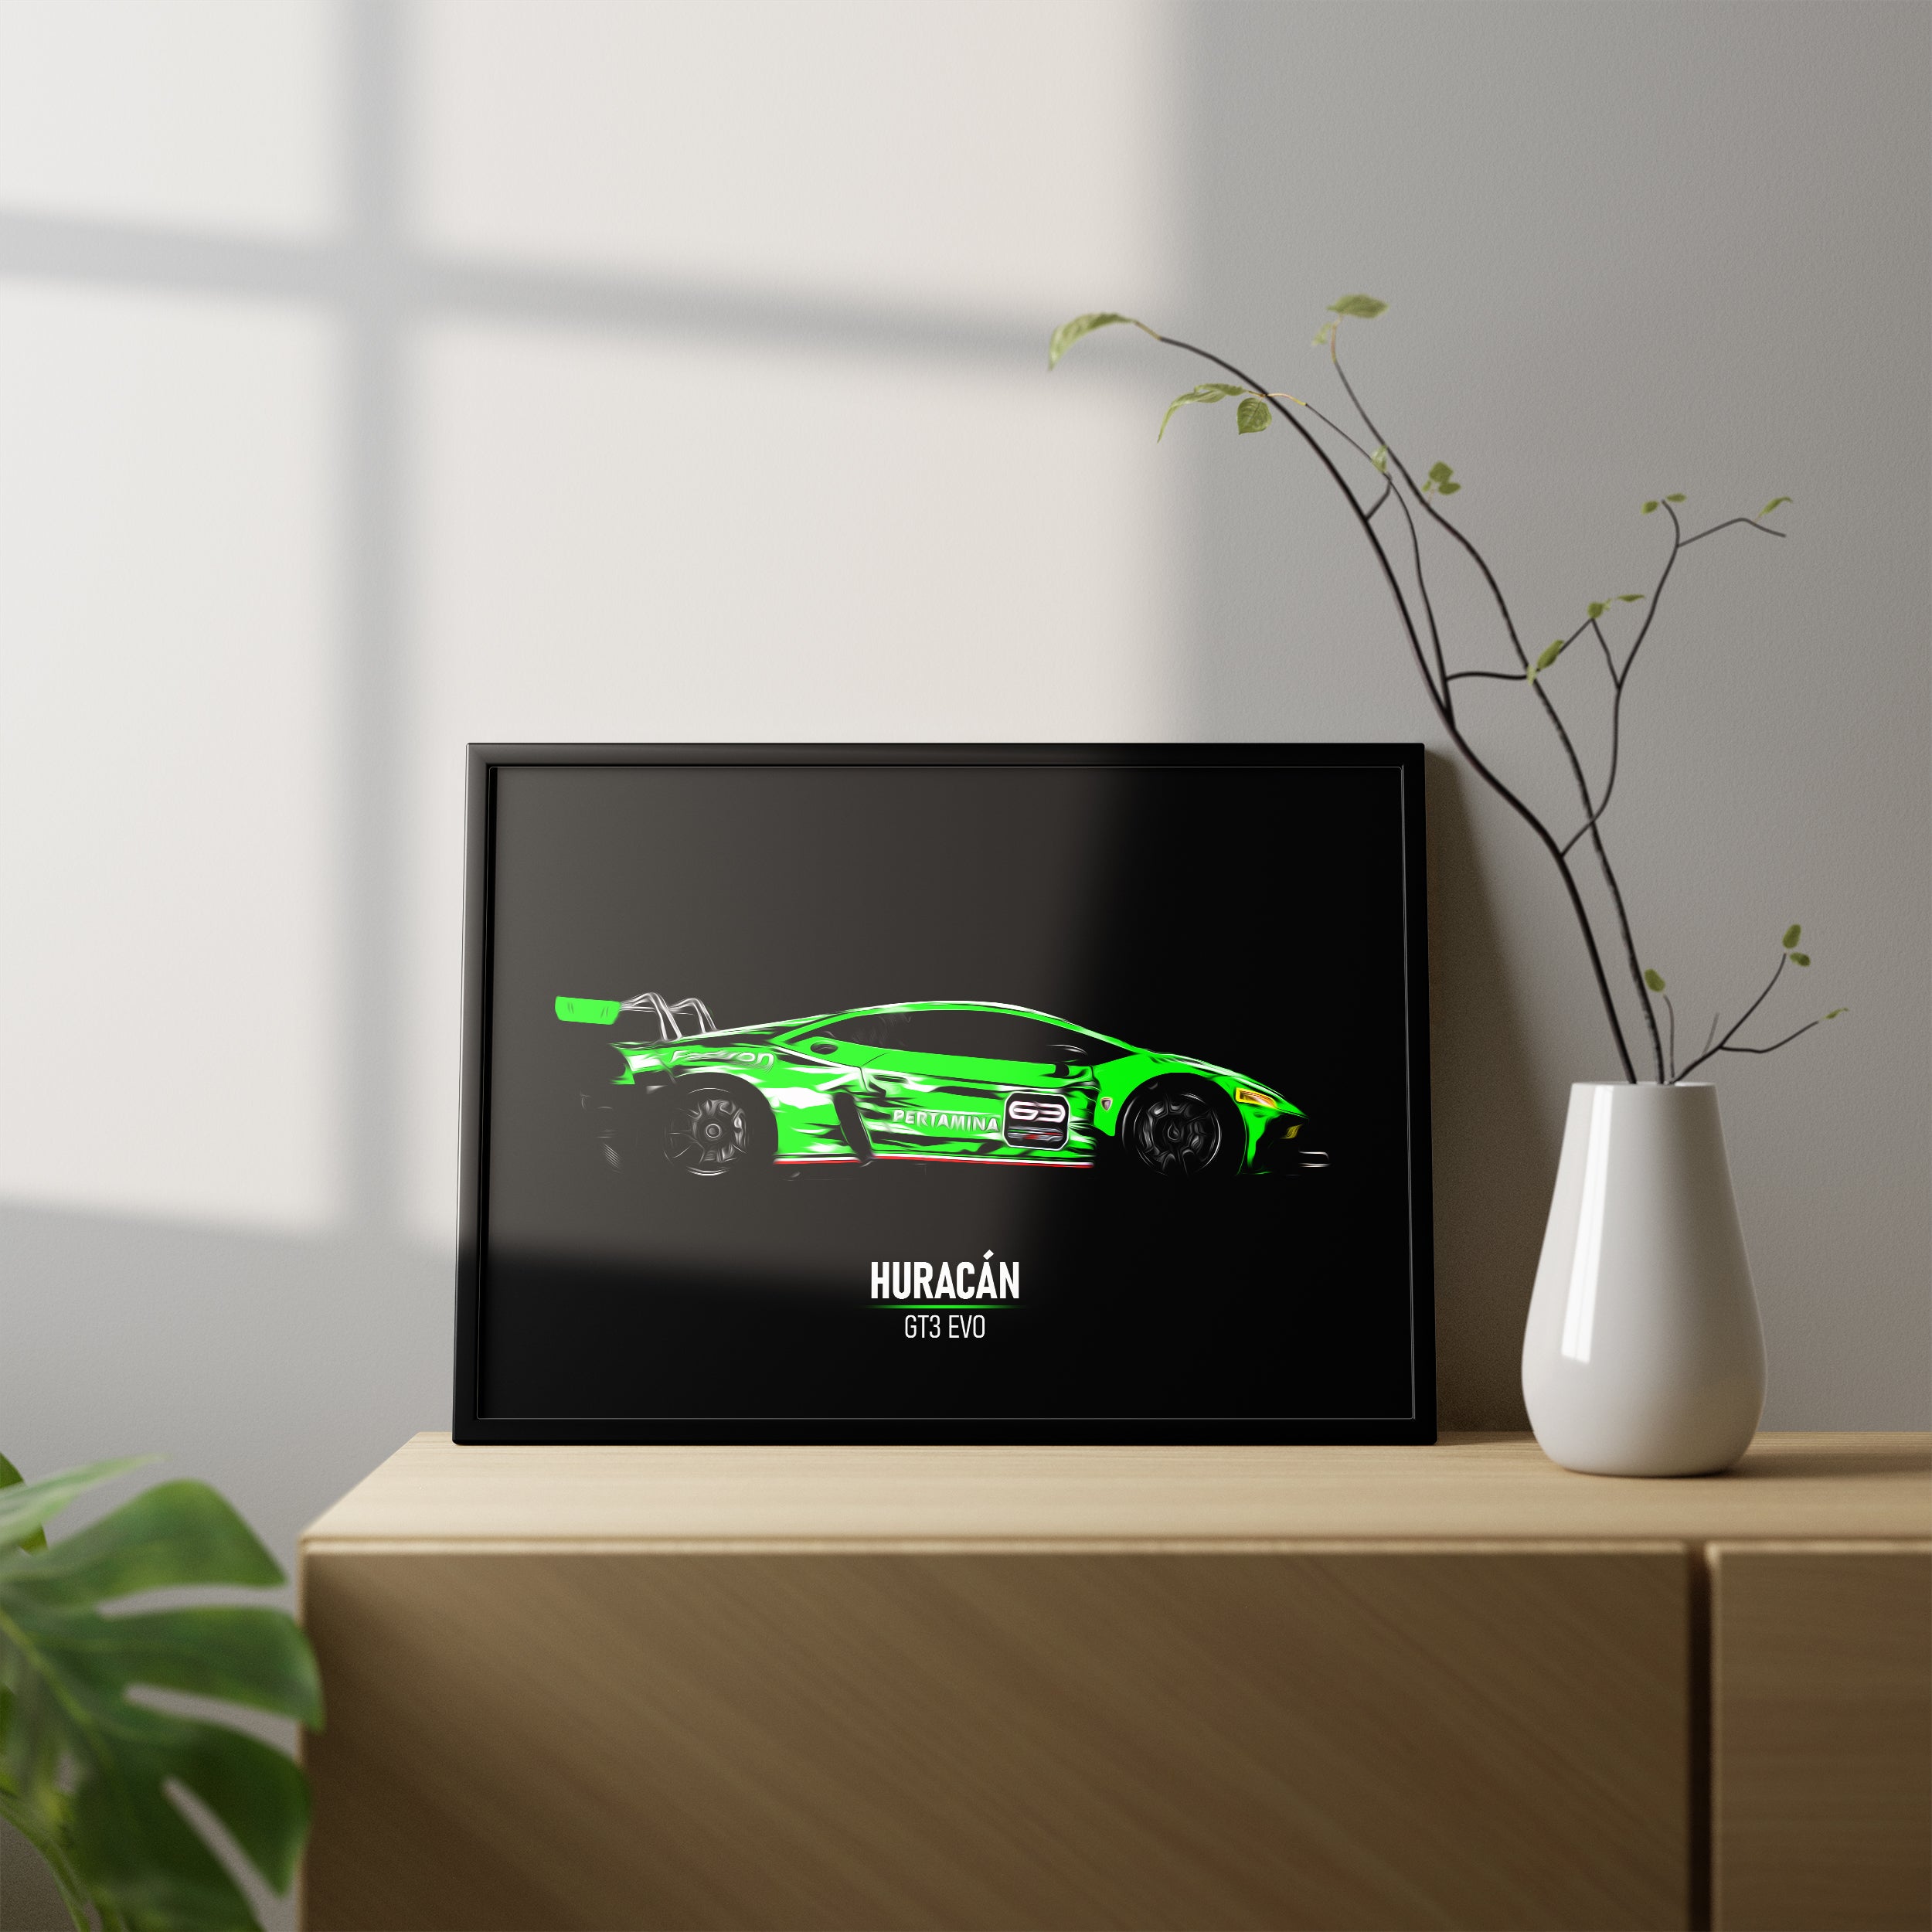 Lamborghini Huracan GT3 EVO - Race Car Framed Poster Print